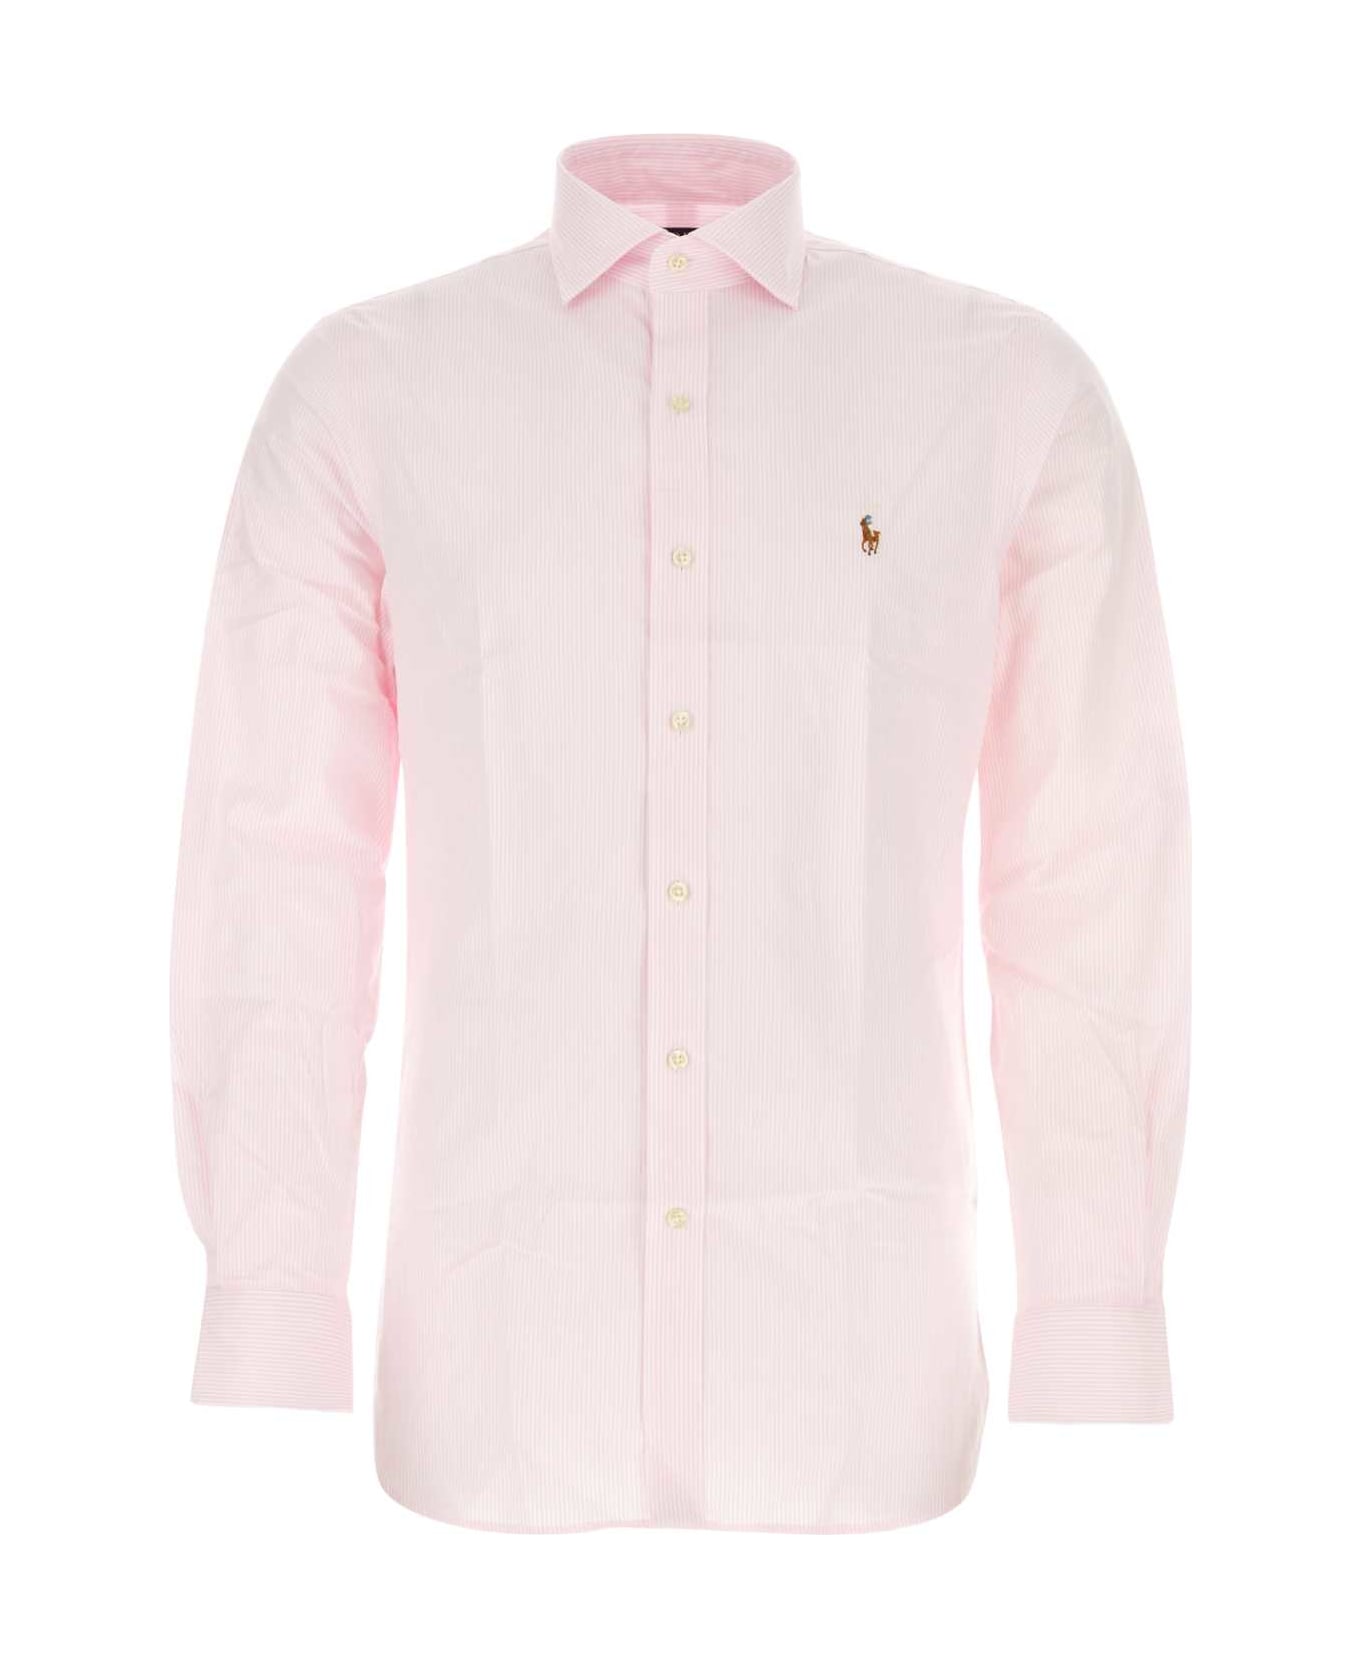 Polo Ralph Lauren Embroidered Oxford Shirt - PINKWHITE